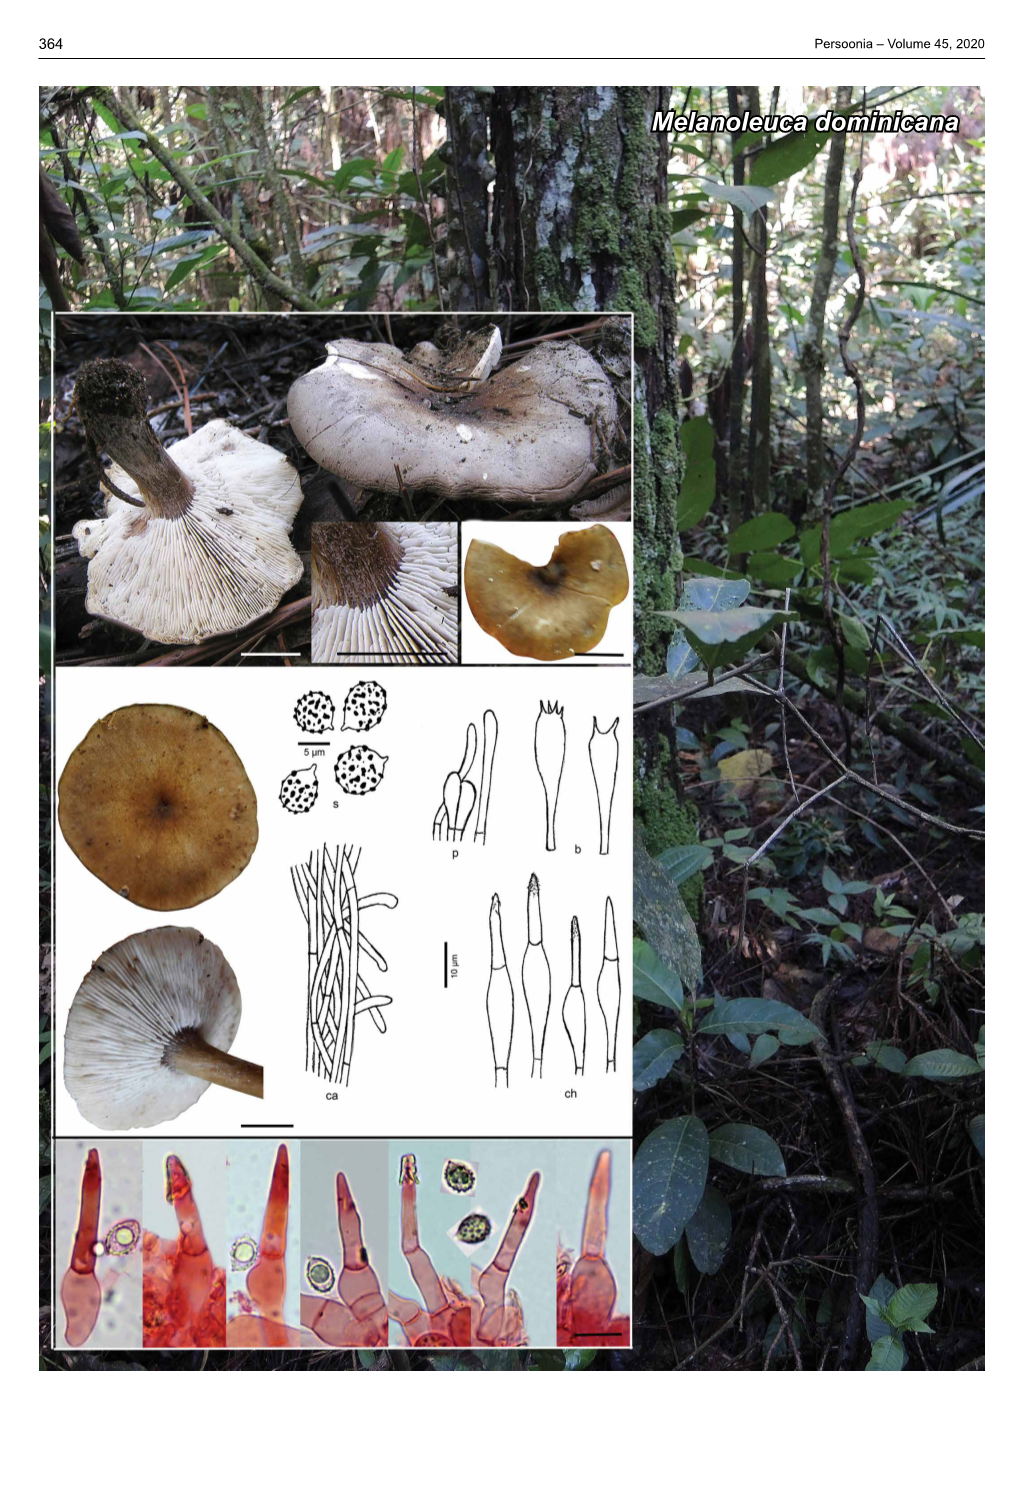 Melanoleuca Dominicana Fungal Planet Description Sheets 365